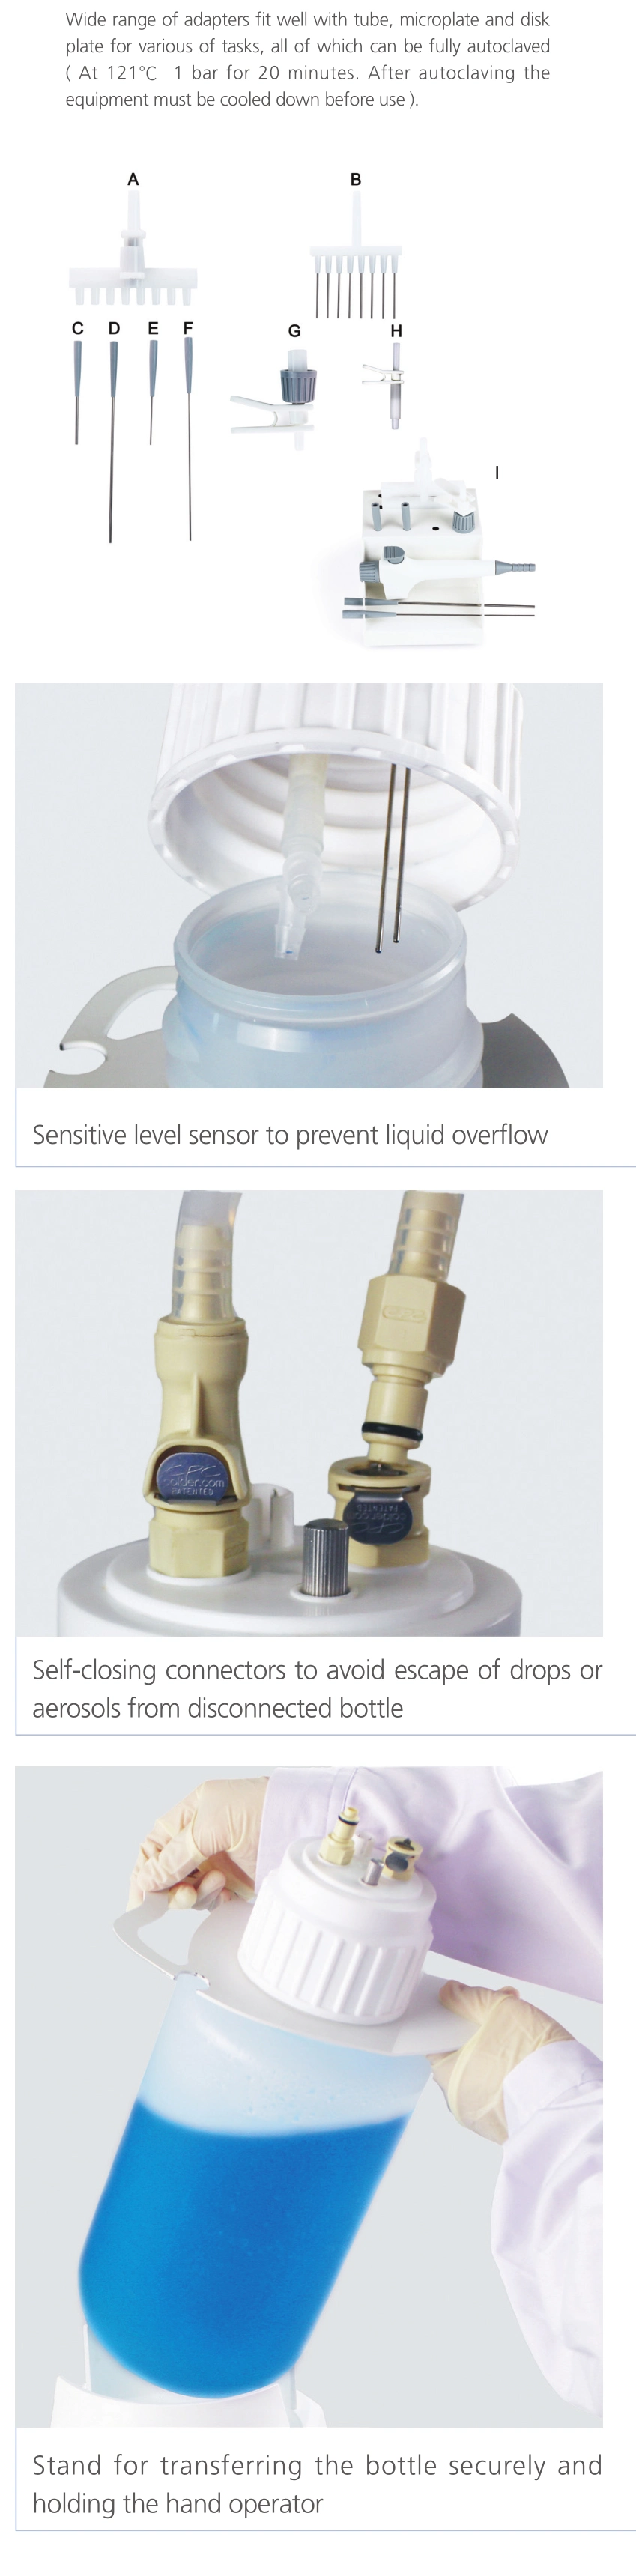 Safevac Laboratory Table-Top Liquid Vacuum Aspiration System